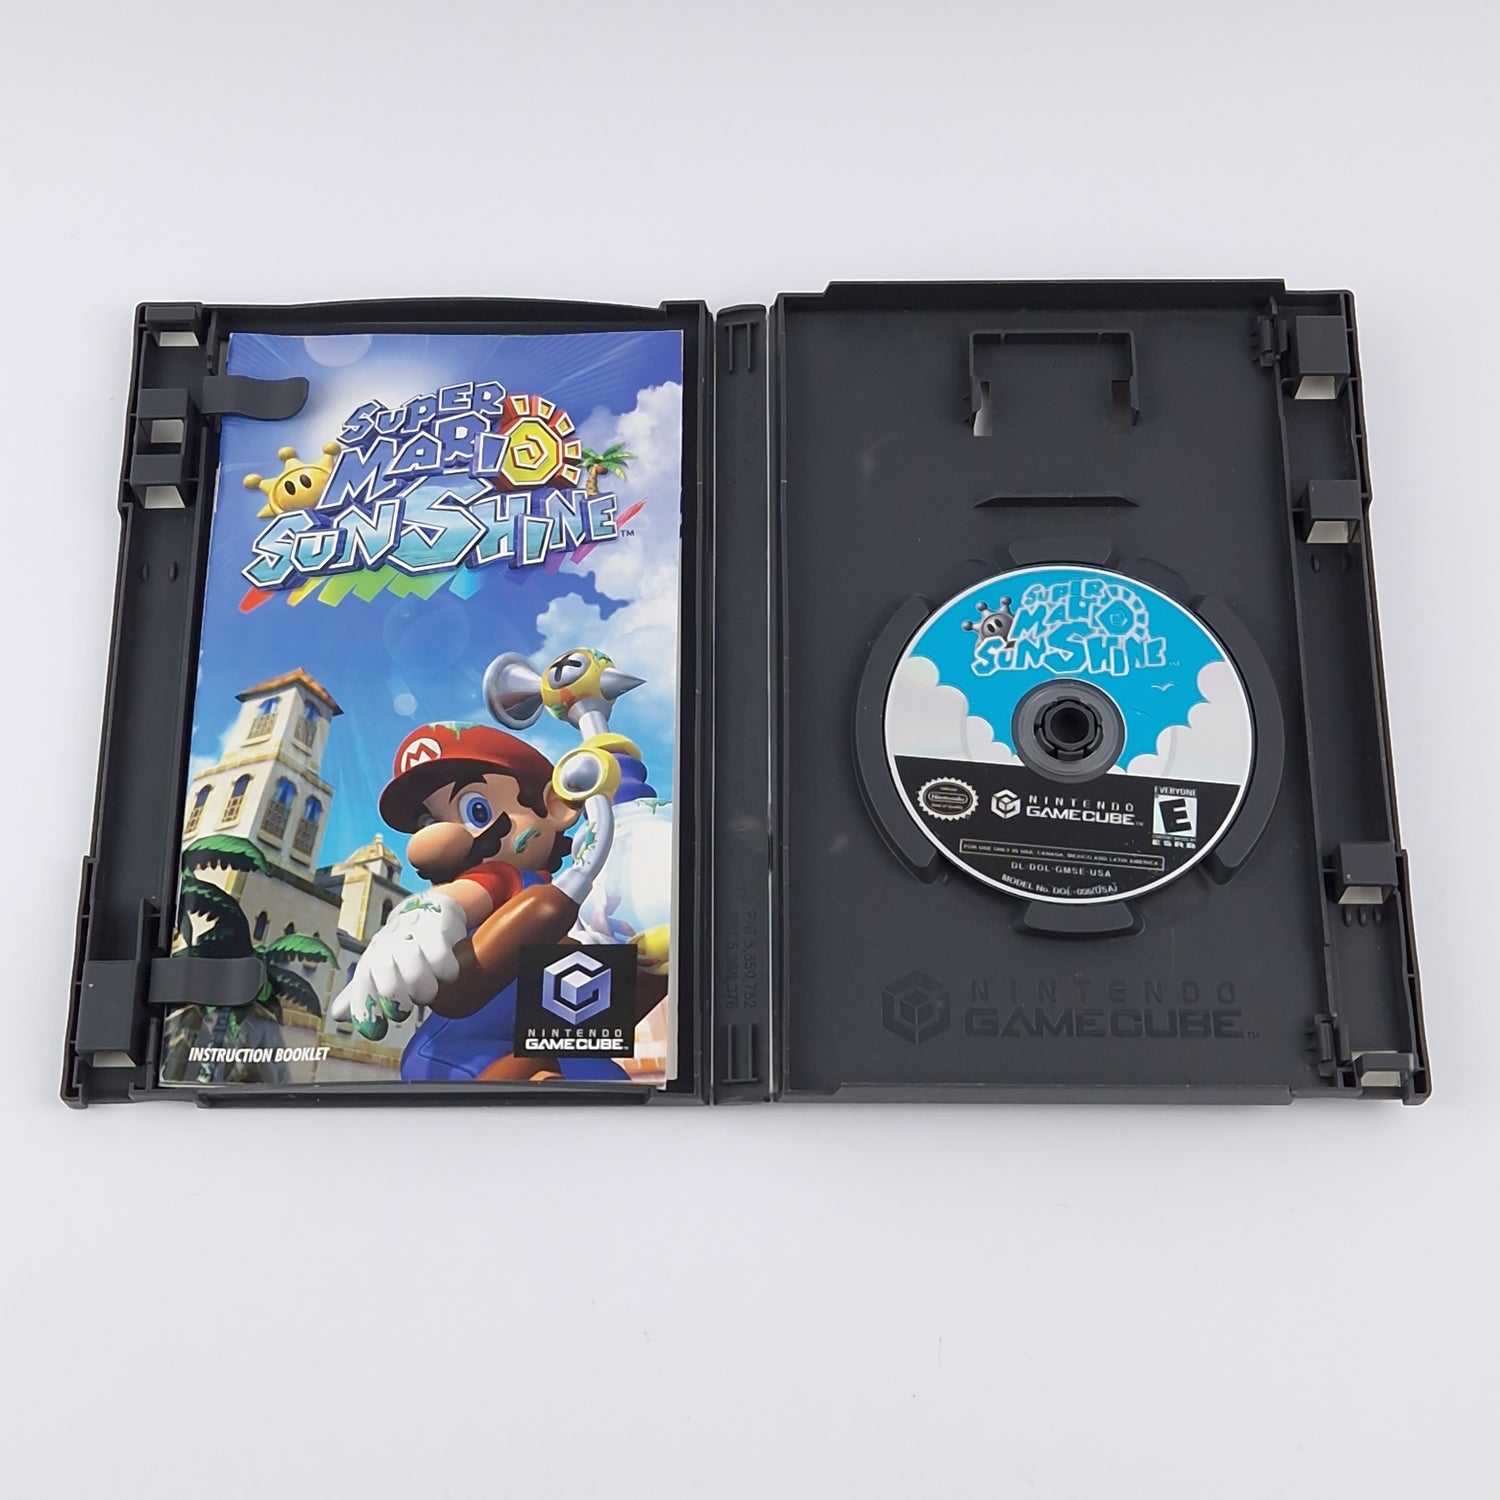 Nintendo Gamecube Game: Super Mario Sunshine - Original Packaging Instructions | NTSC-U/C USA